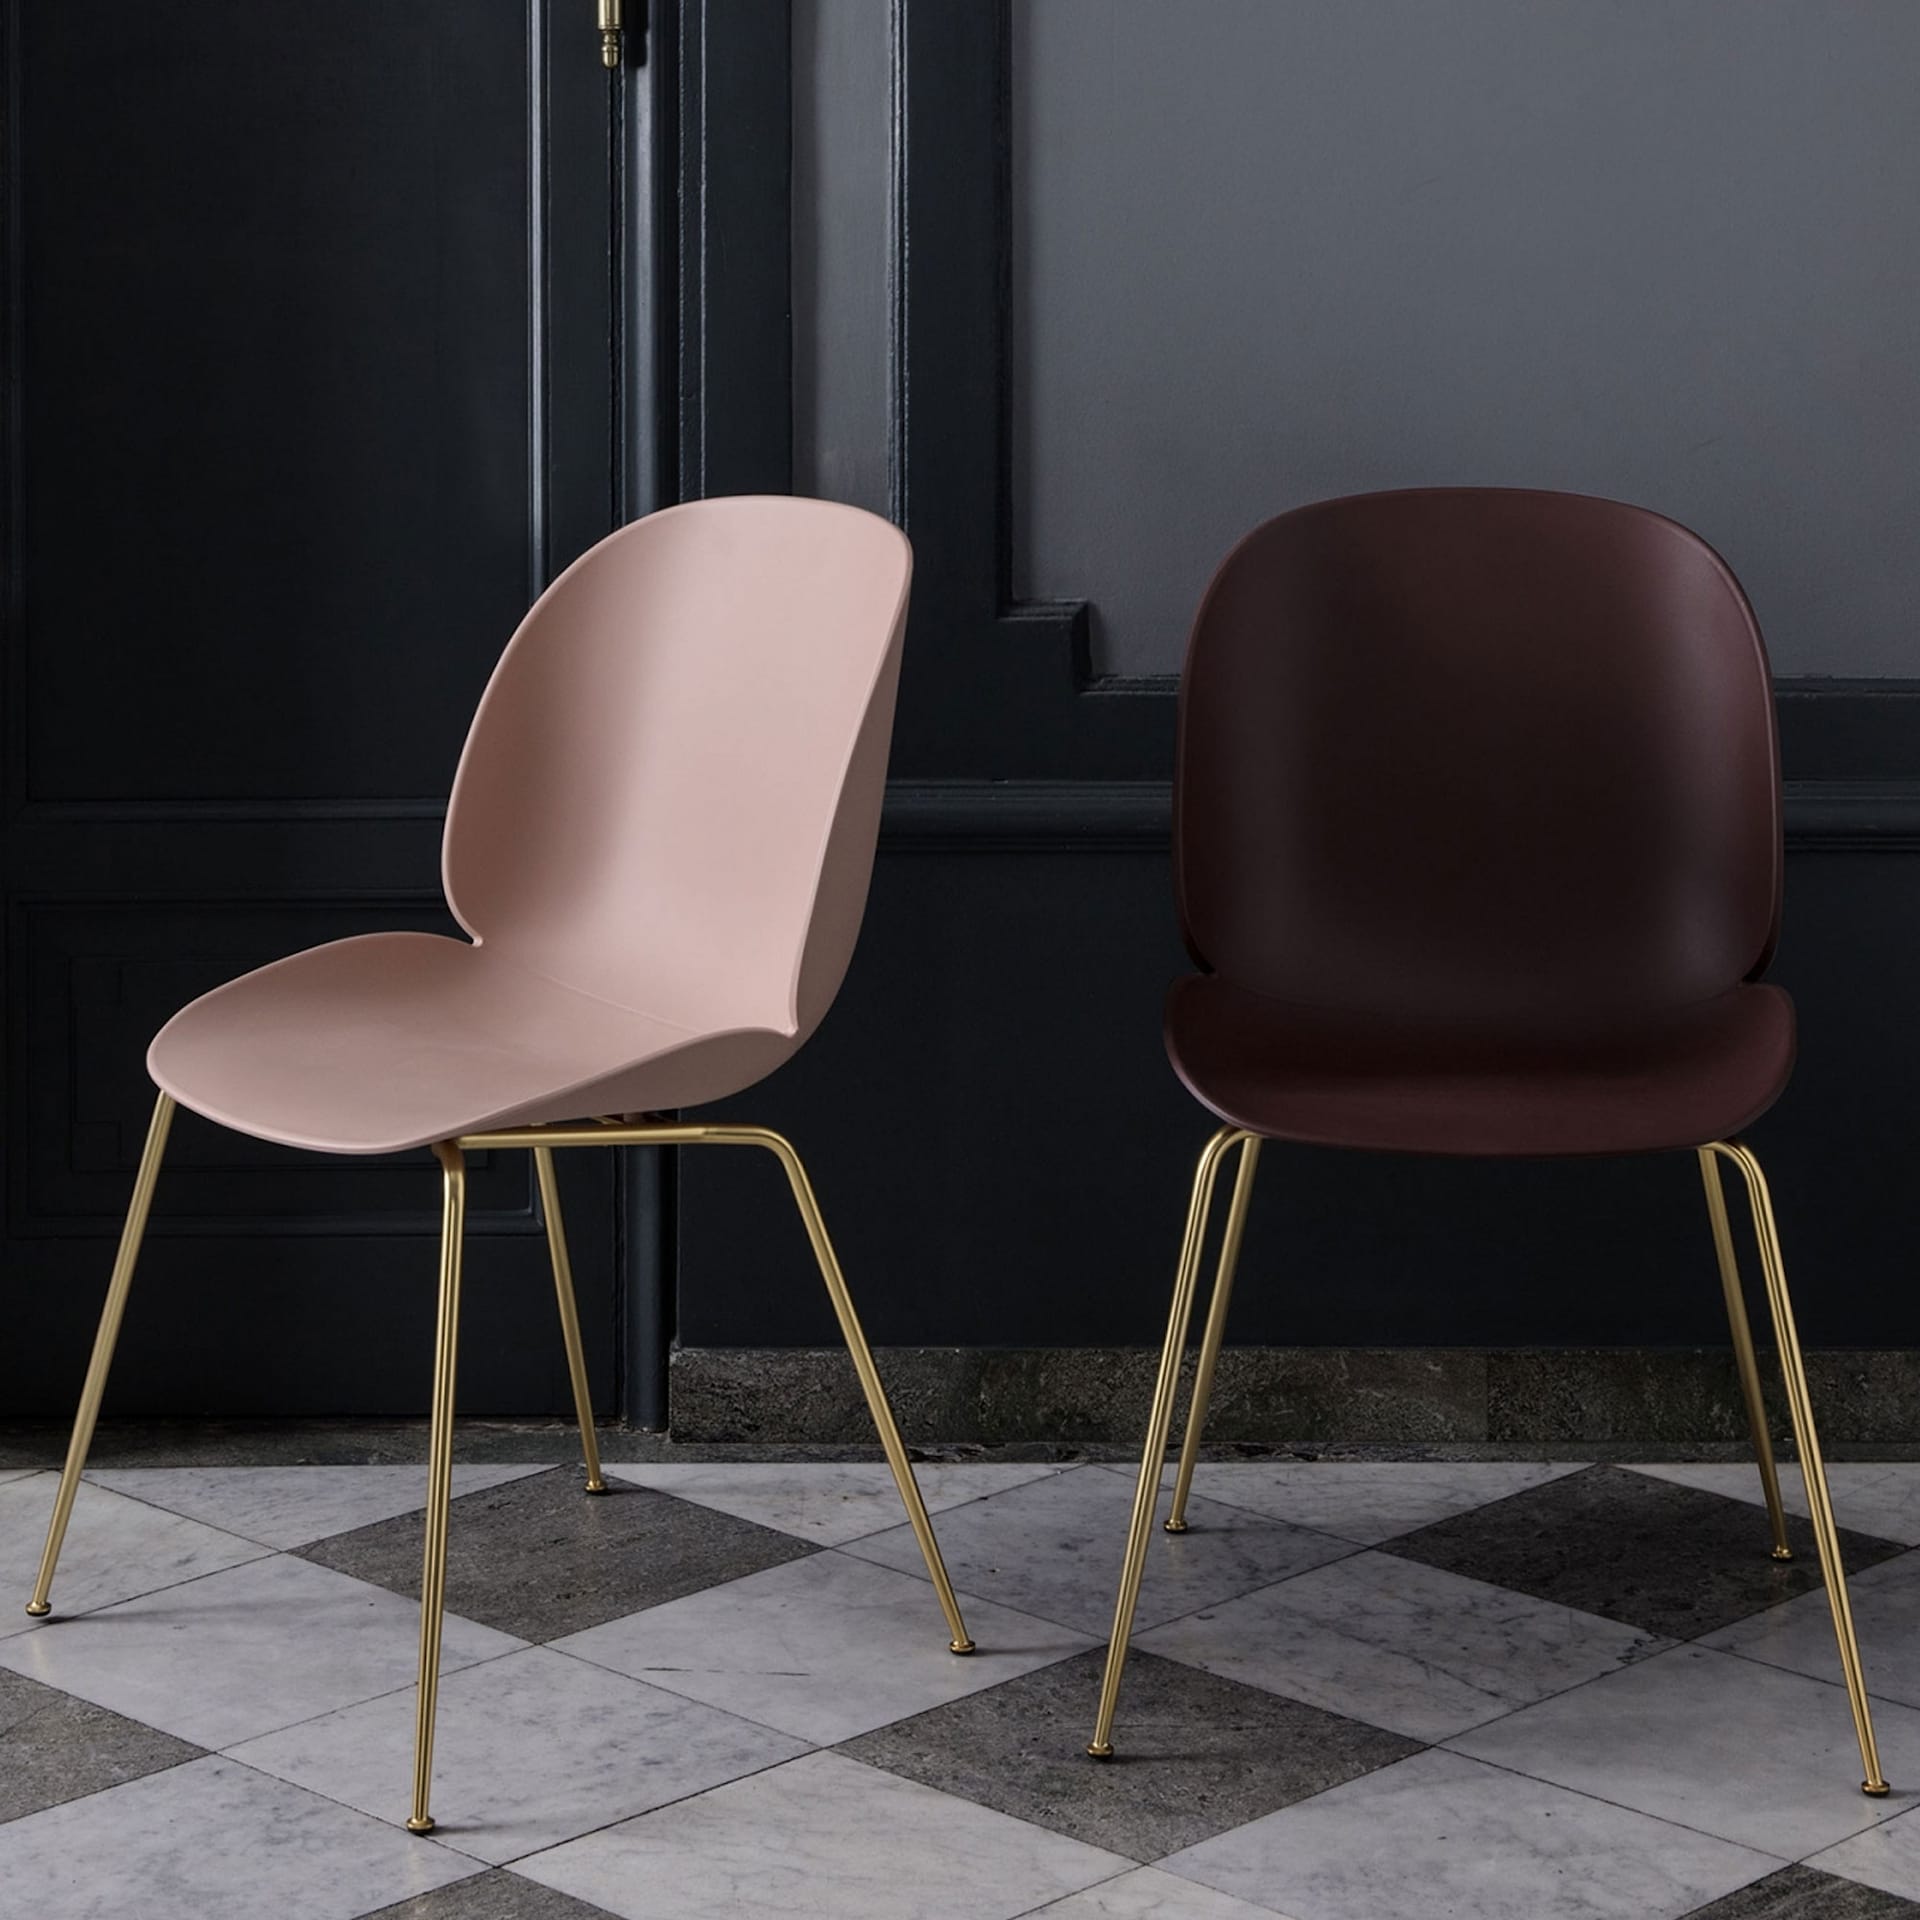 Beetle Dining Chair Conic Base Brass - Un-Upholstered - Gubi - GamFratesi - NO GA